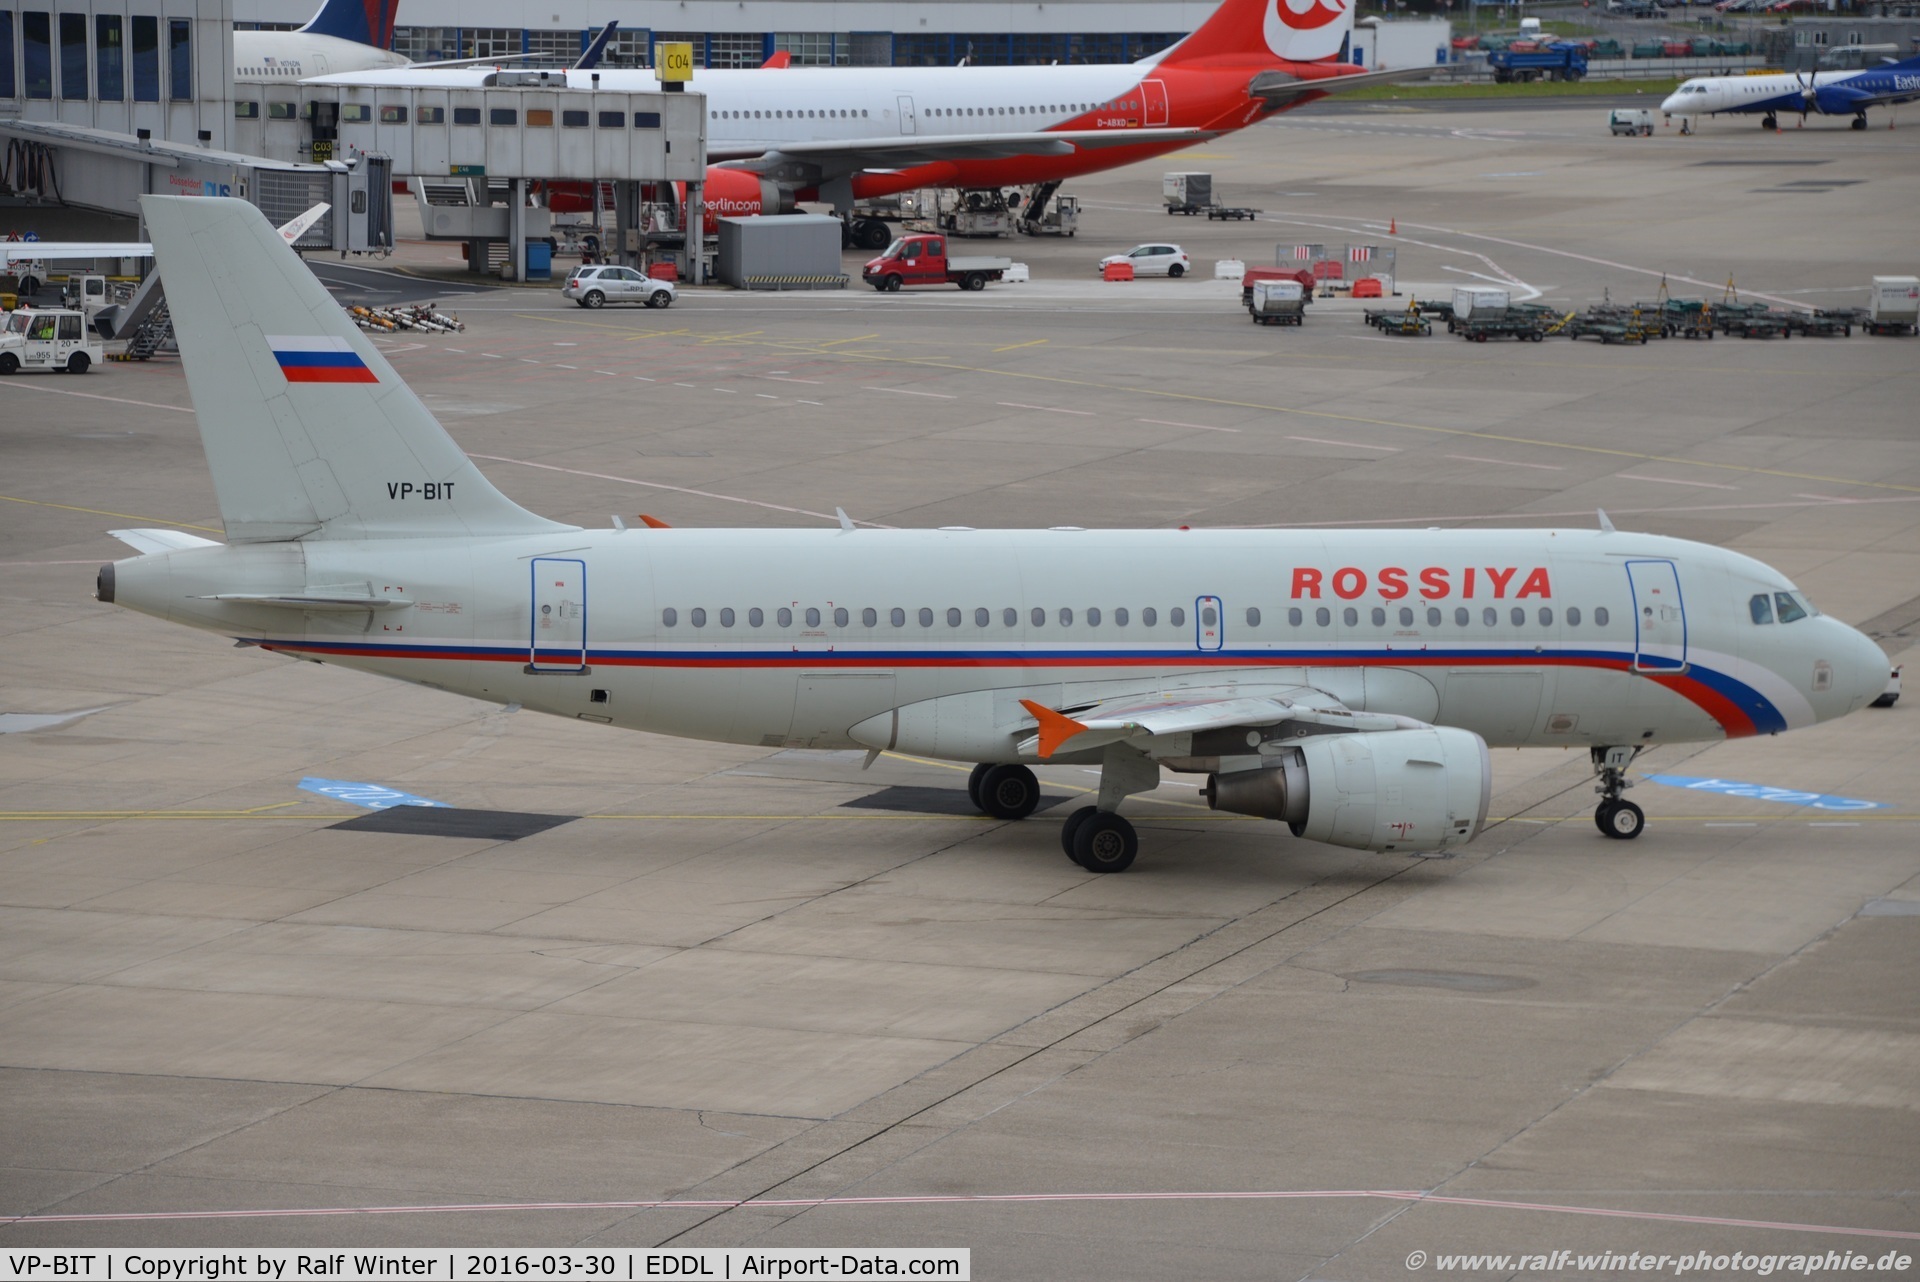 VP-BIT, 2002 Airbus A319-111 C/N 1761, Airbus A319-112 - R4 SDM Rossiya - 1761 - VP-BIT - 30.03.30216 - DUS